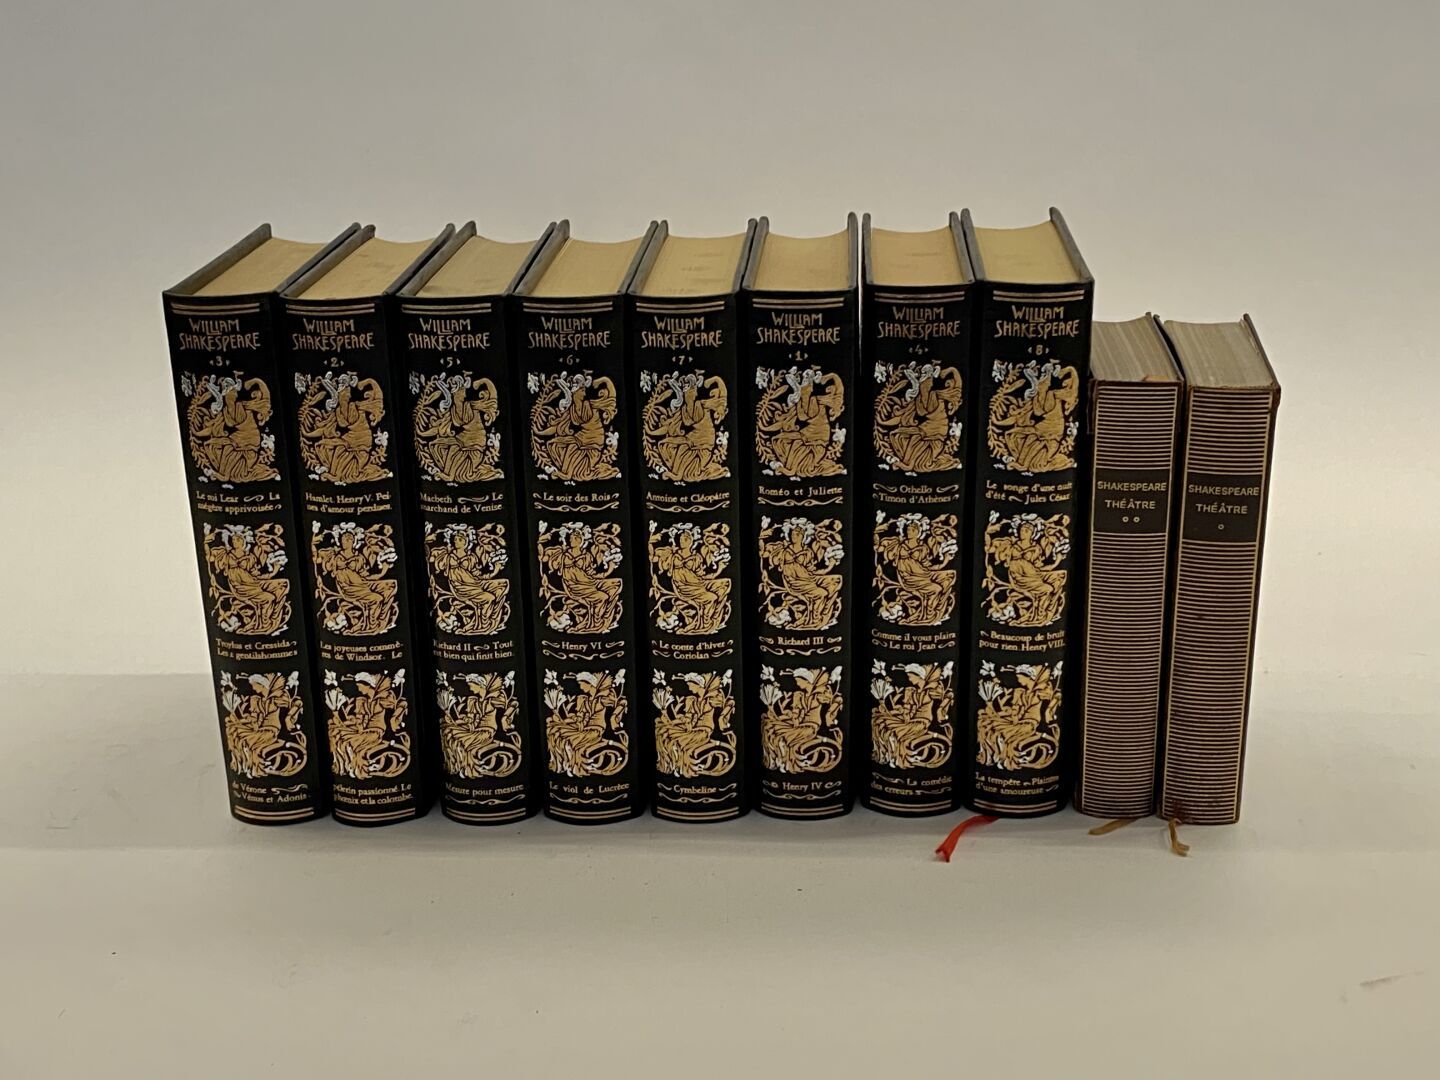 Null 莎士比亚。全集》，Jean de Bonnot出版社，巴黎。10卷8开本。

用印有图案的黑色马可布装订。